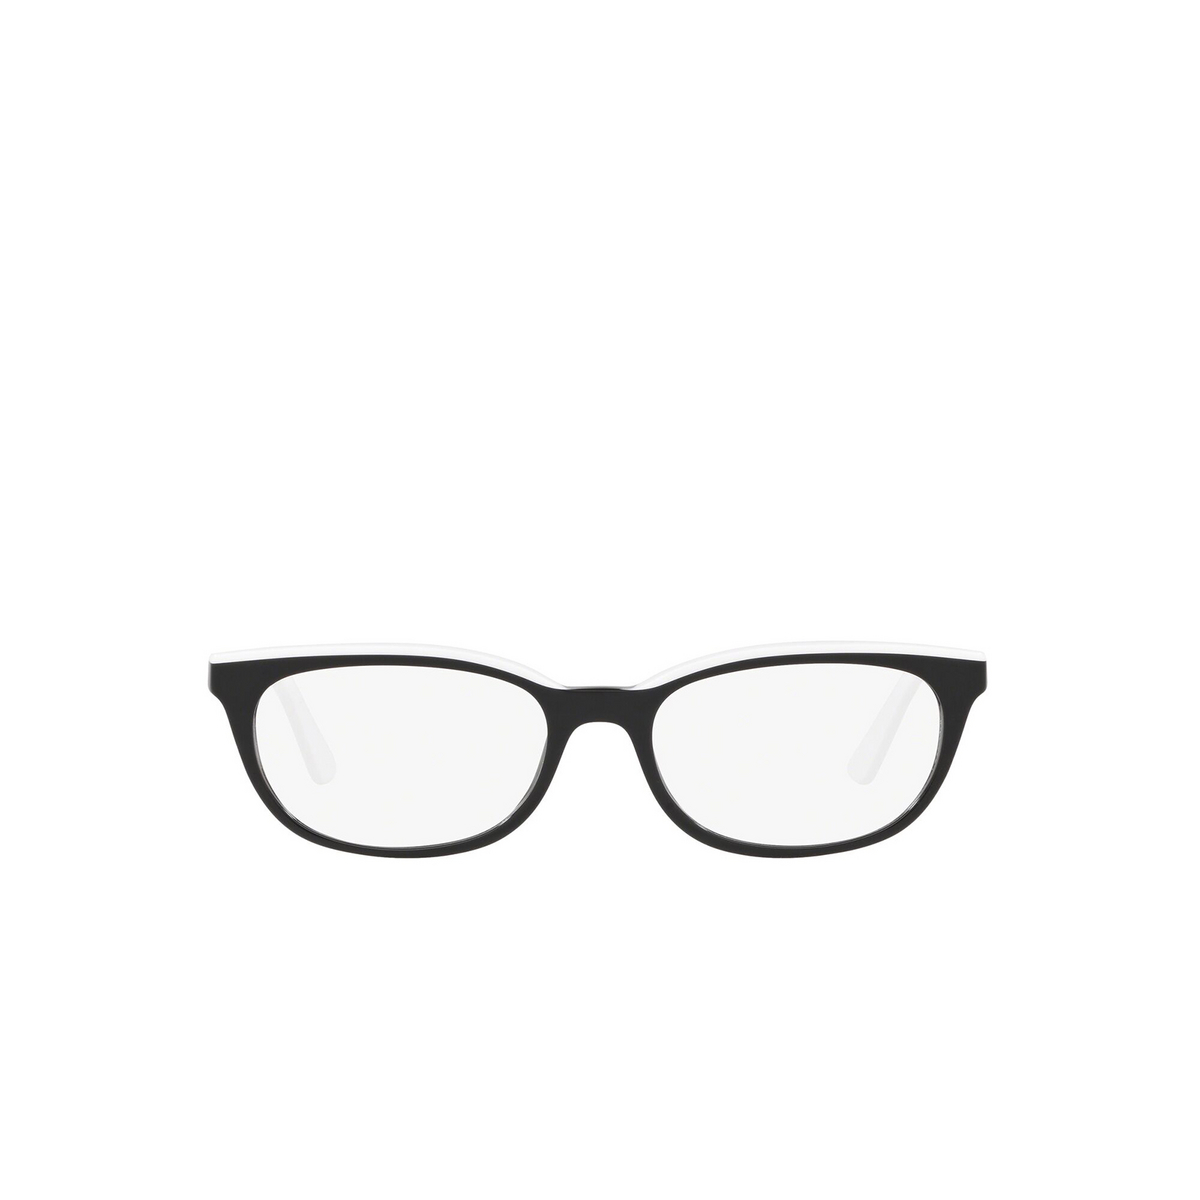 Prada® Oval Eyeglasses: Catwalk PR 13VV color Black / White YC41O1 - front view.